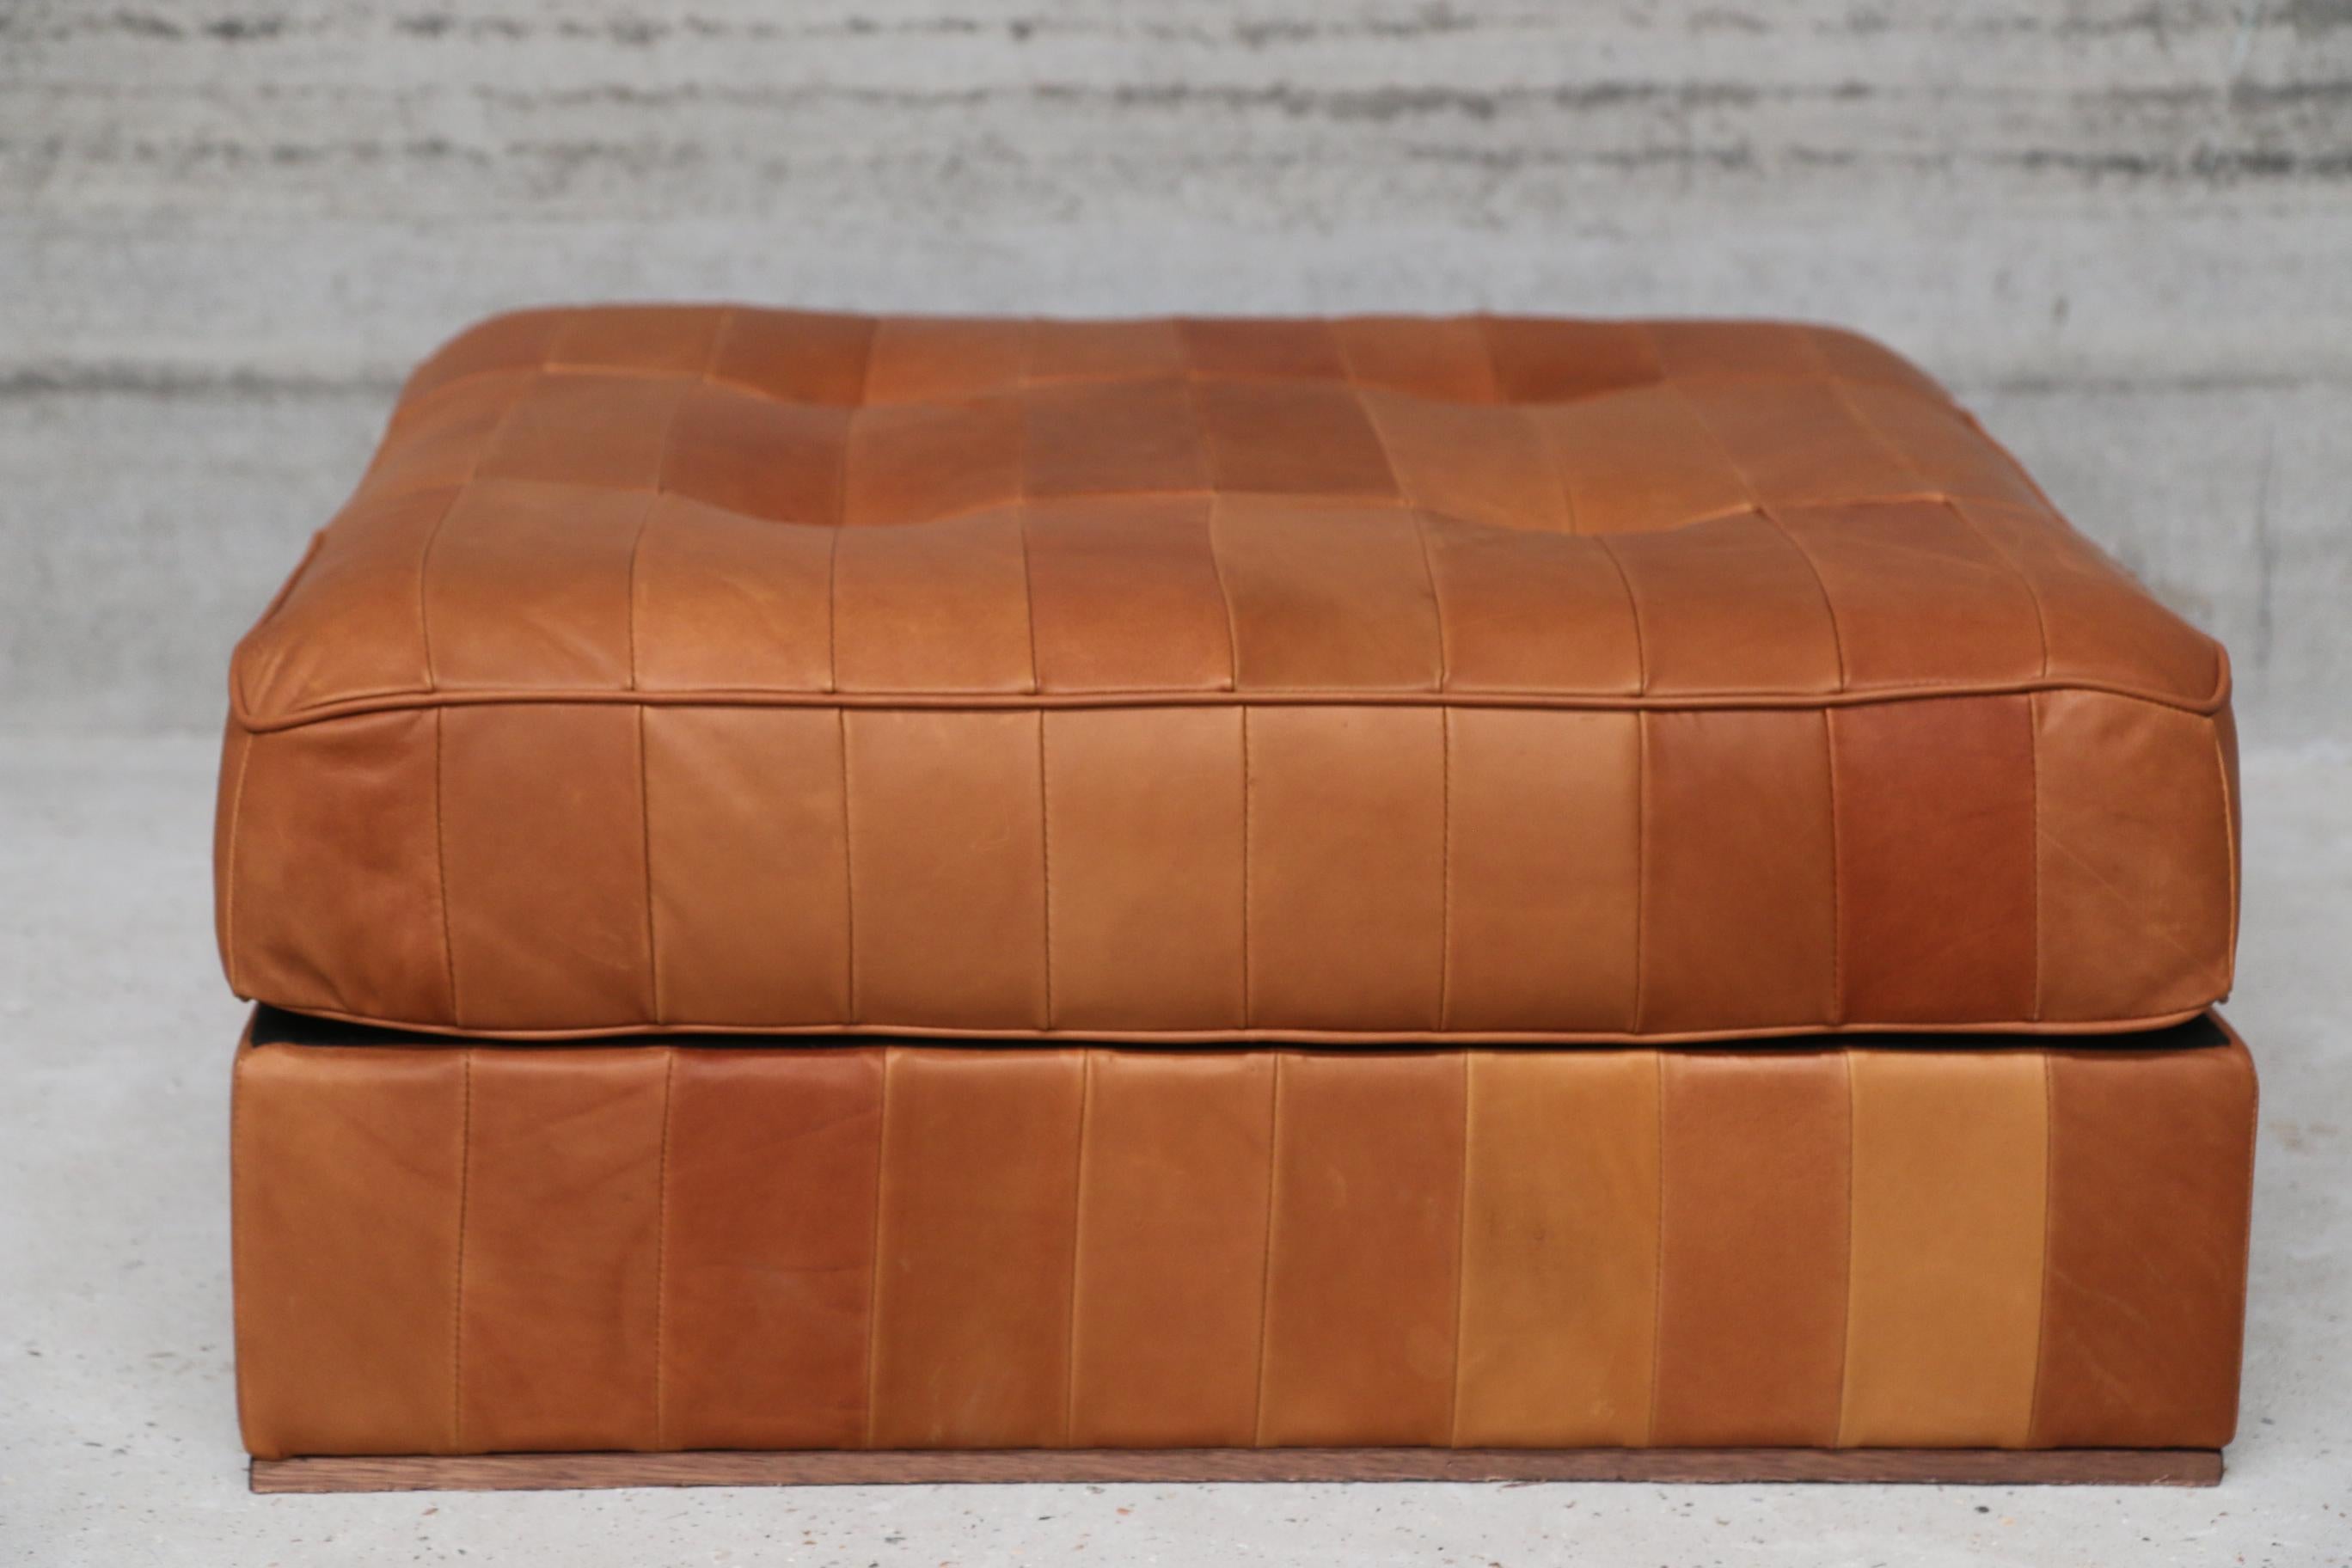 Rare Ds88 Cognac Leather Patchwork Love Seat De Sede Swiss For Sale 5